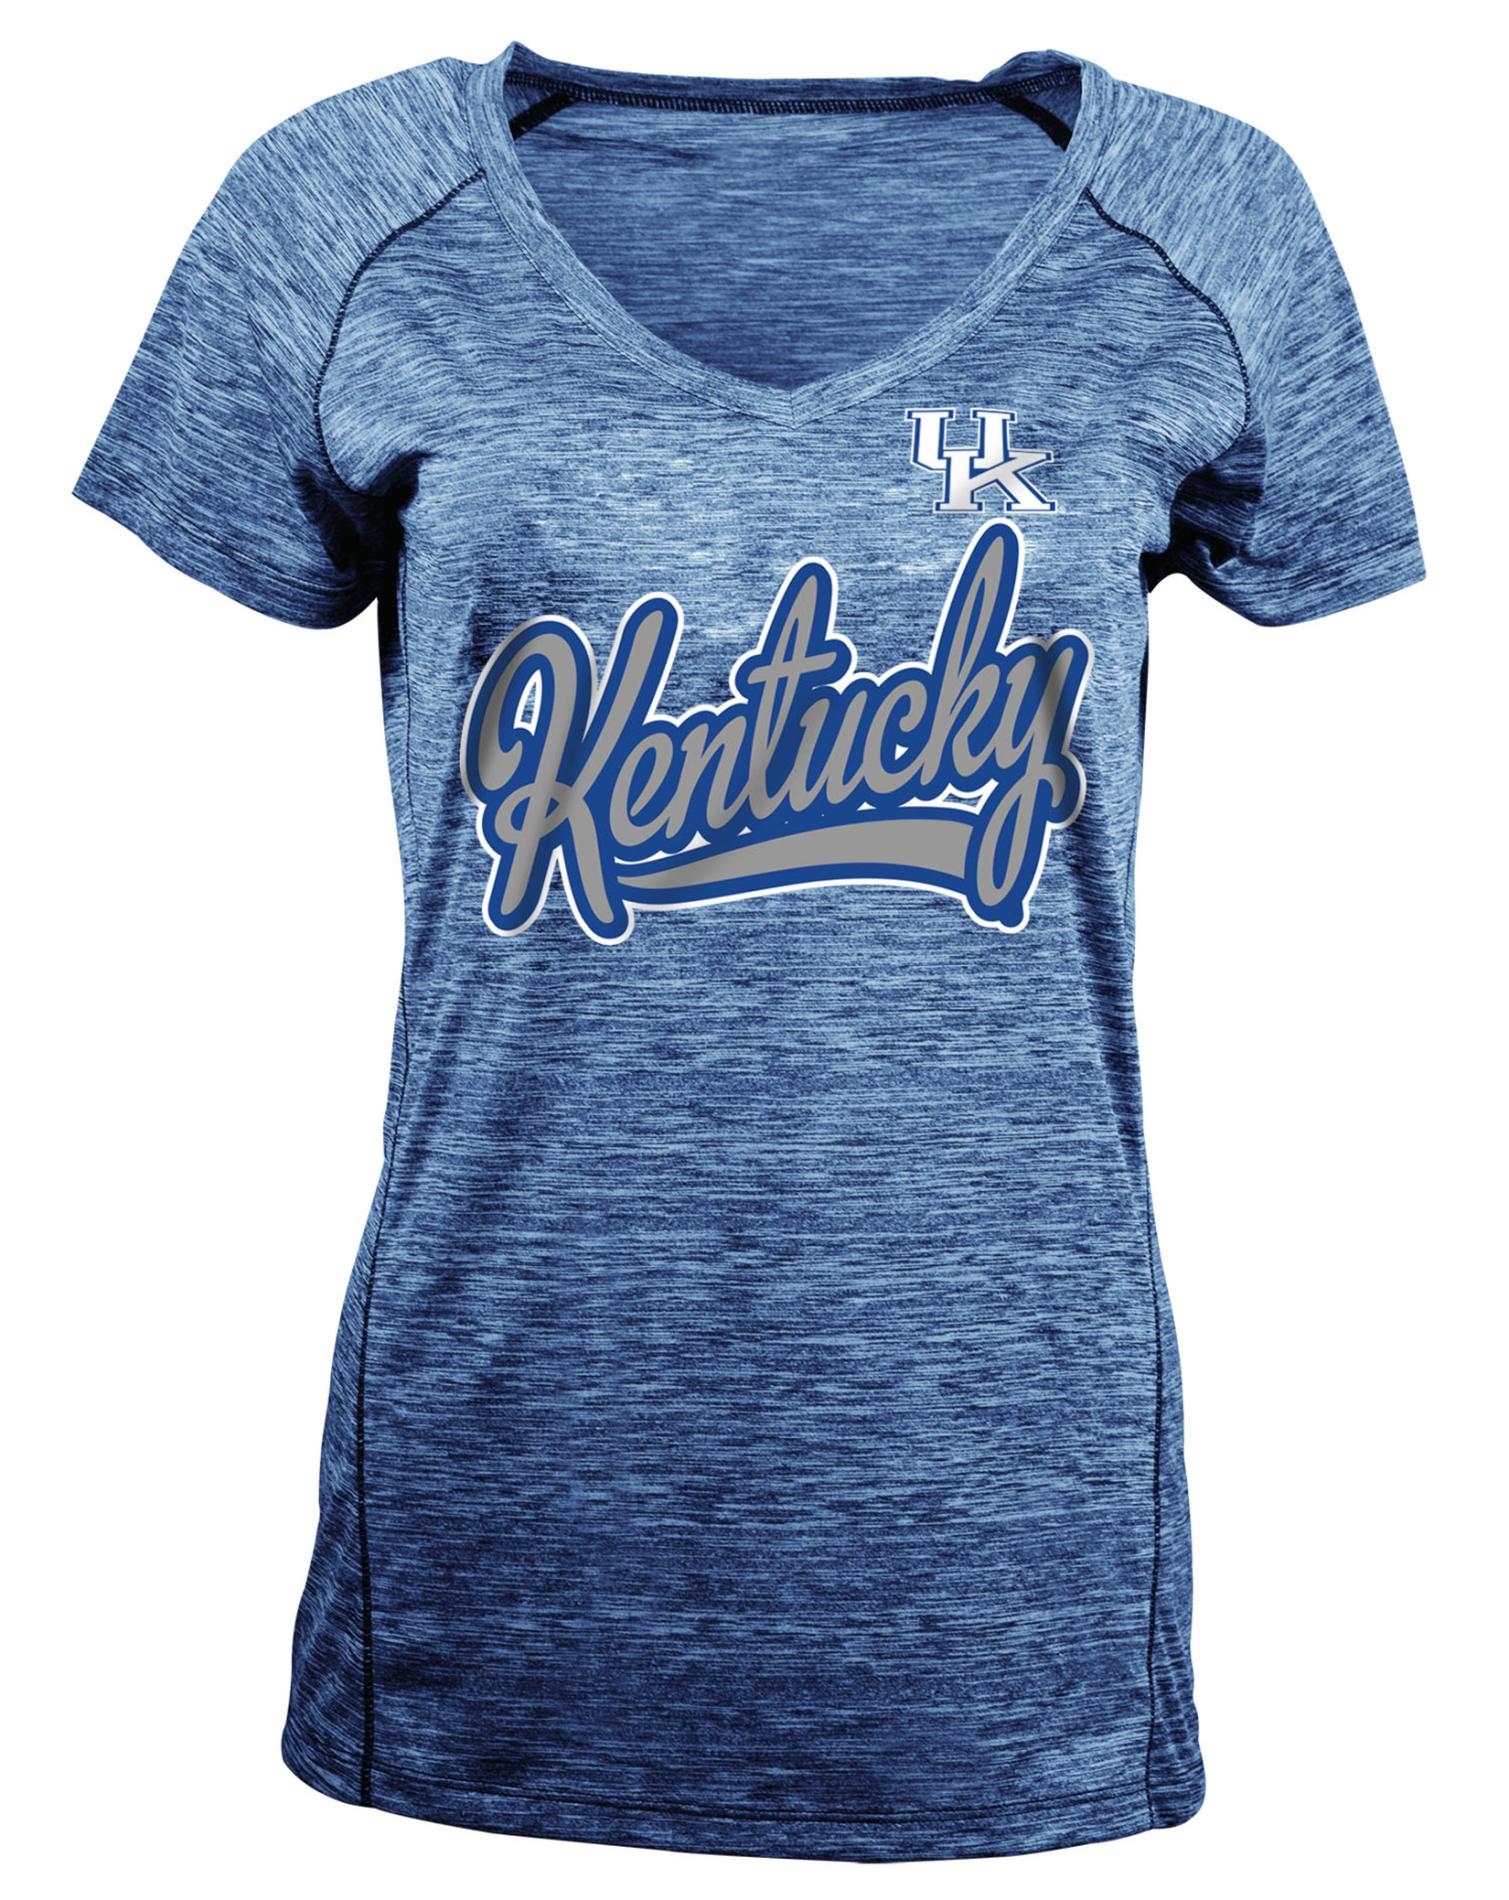 NCAA Women's Performance Shirt - University of Kentucky Wildcats